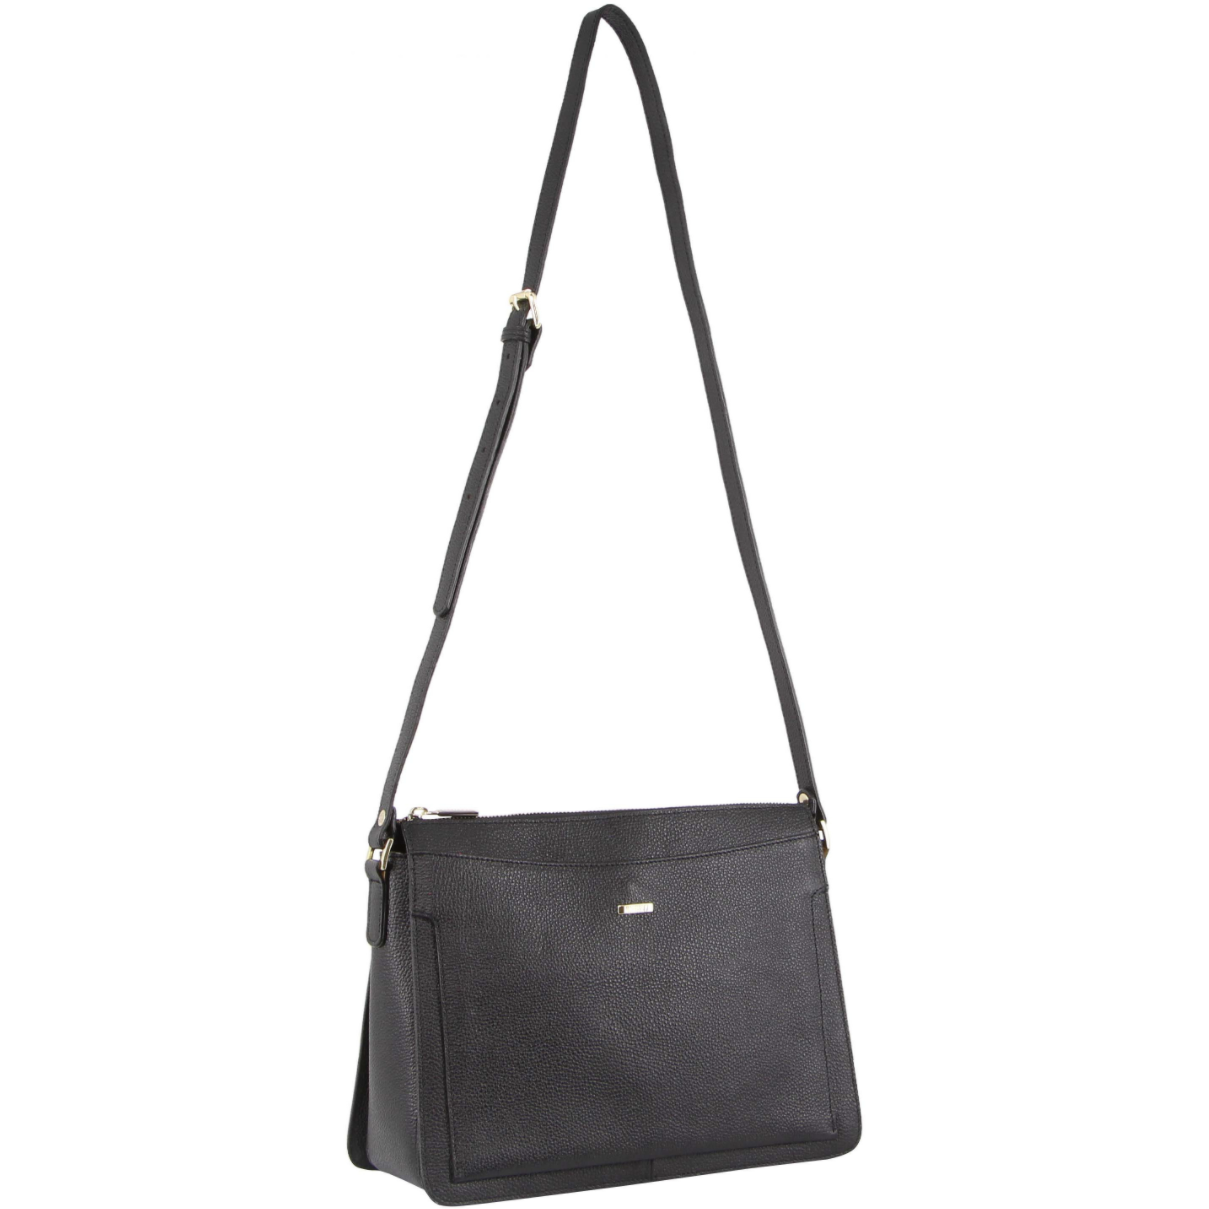 Morrissey Italian Structured Leather Cross Body Handbag Tote Bag (MO3162) - Black